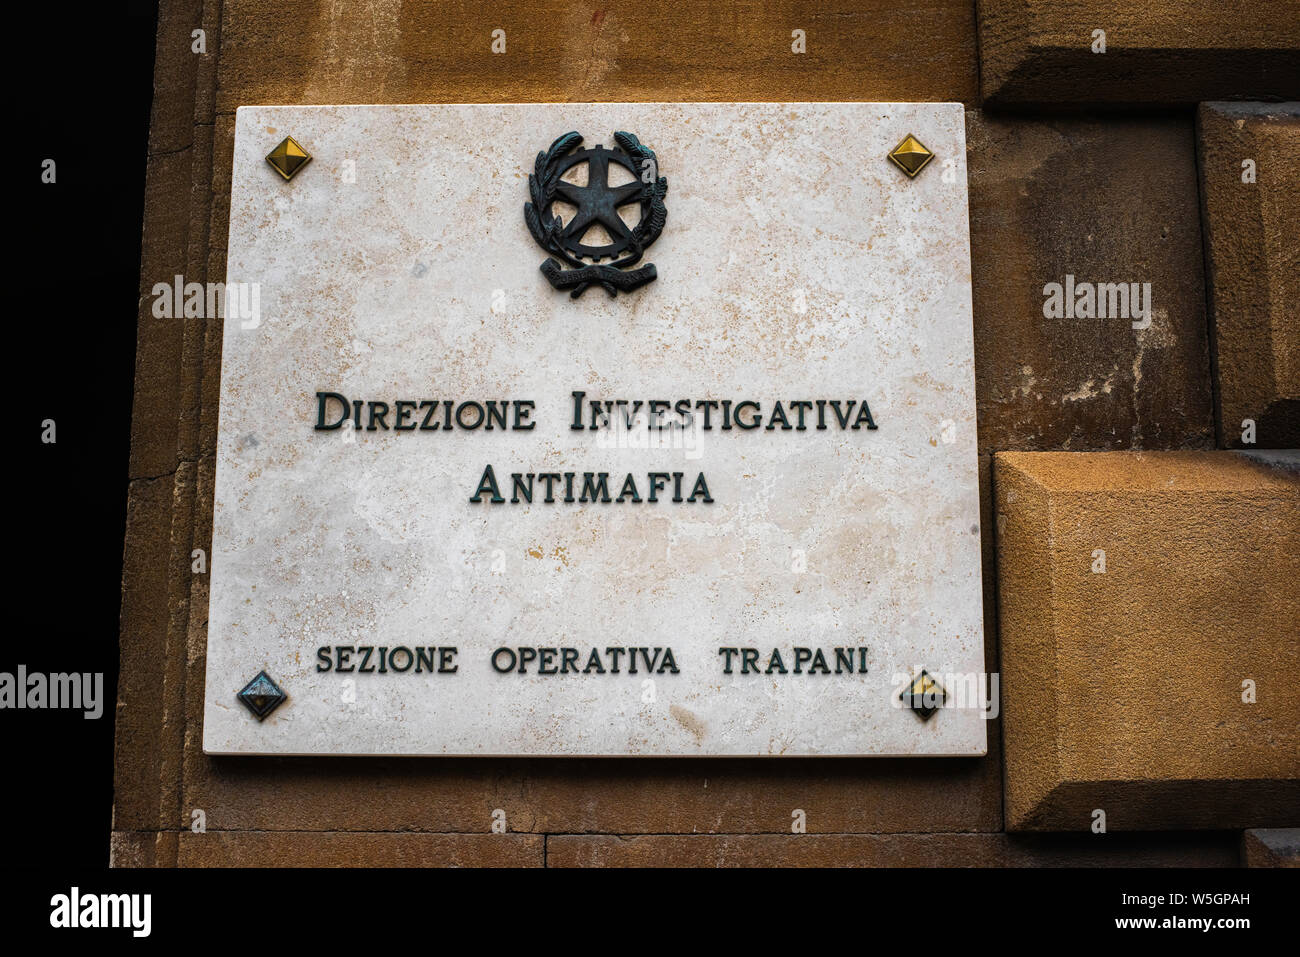 Plaque at entrance to the Anti-Mafia office, Trapani, Sicily Stock Photo